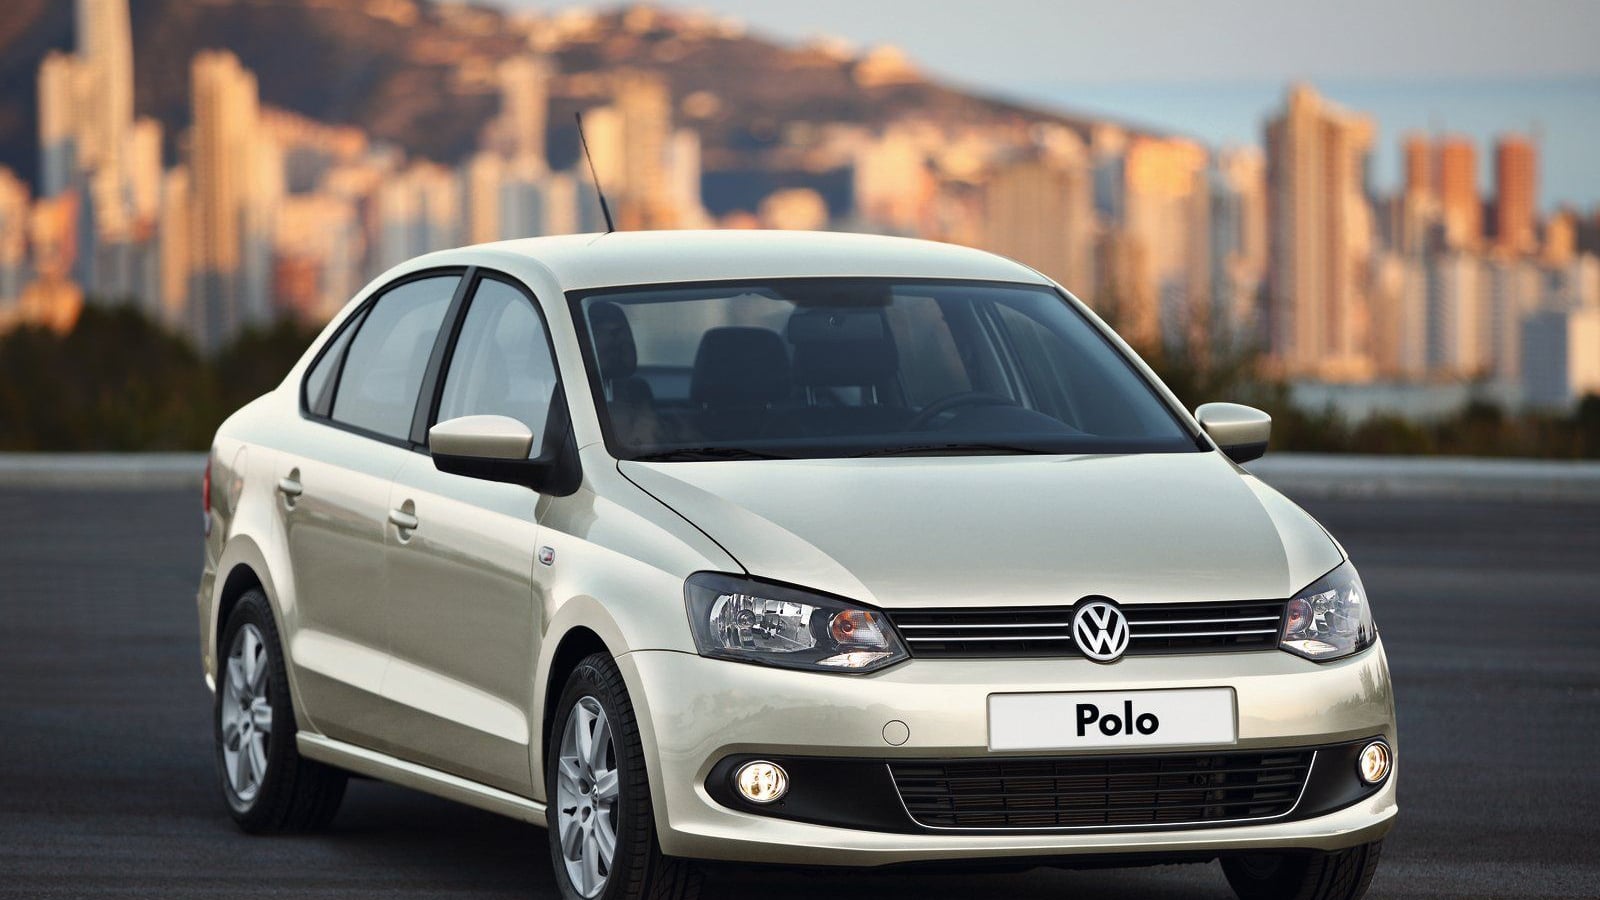 2011 Volkswagen Polo Sedan unveiled in Russia